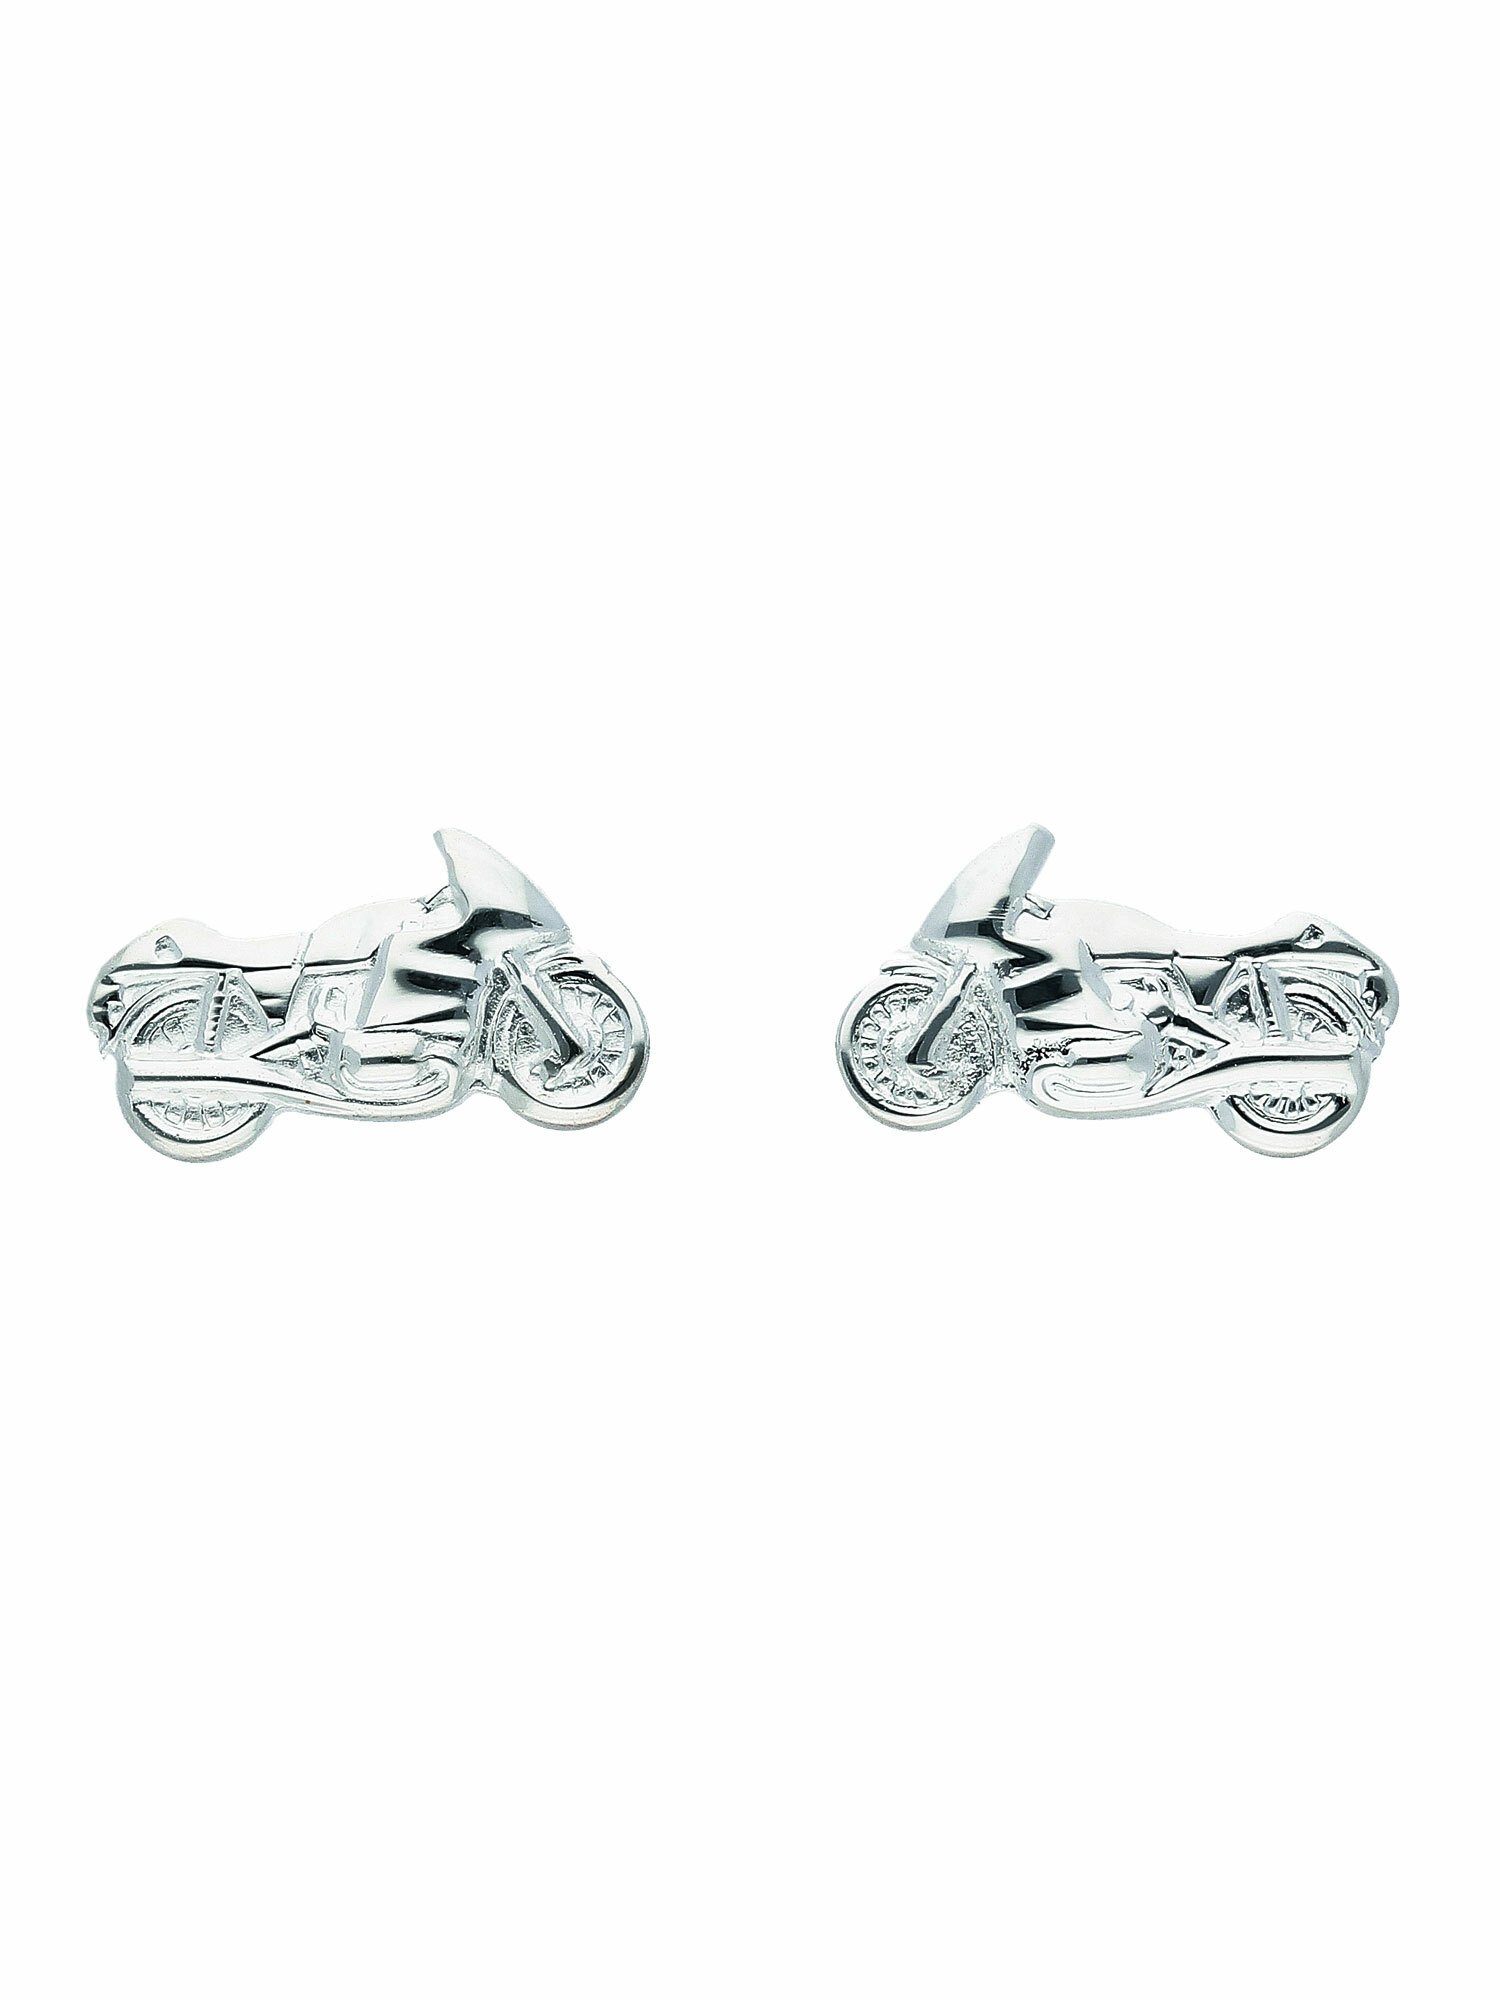 Damen Schmuck Adelia´s Paar Ohrhänger 1 Paar 925 Silber Ohrringe / Ohrstecker Motorrad, 925 Sterling Silber Silberschmuck für Da